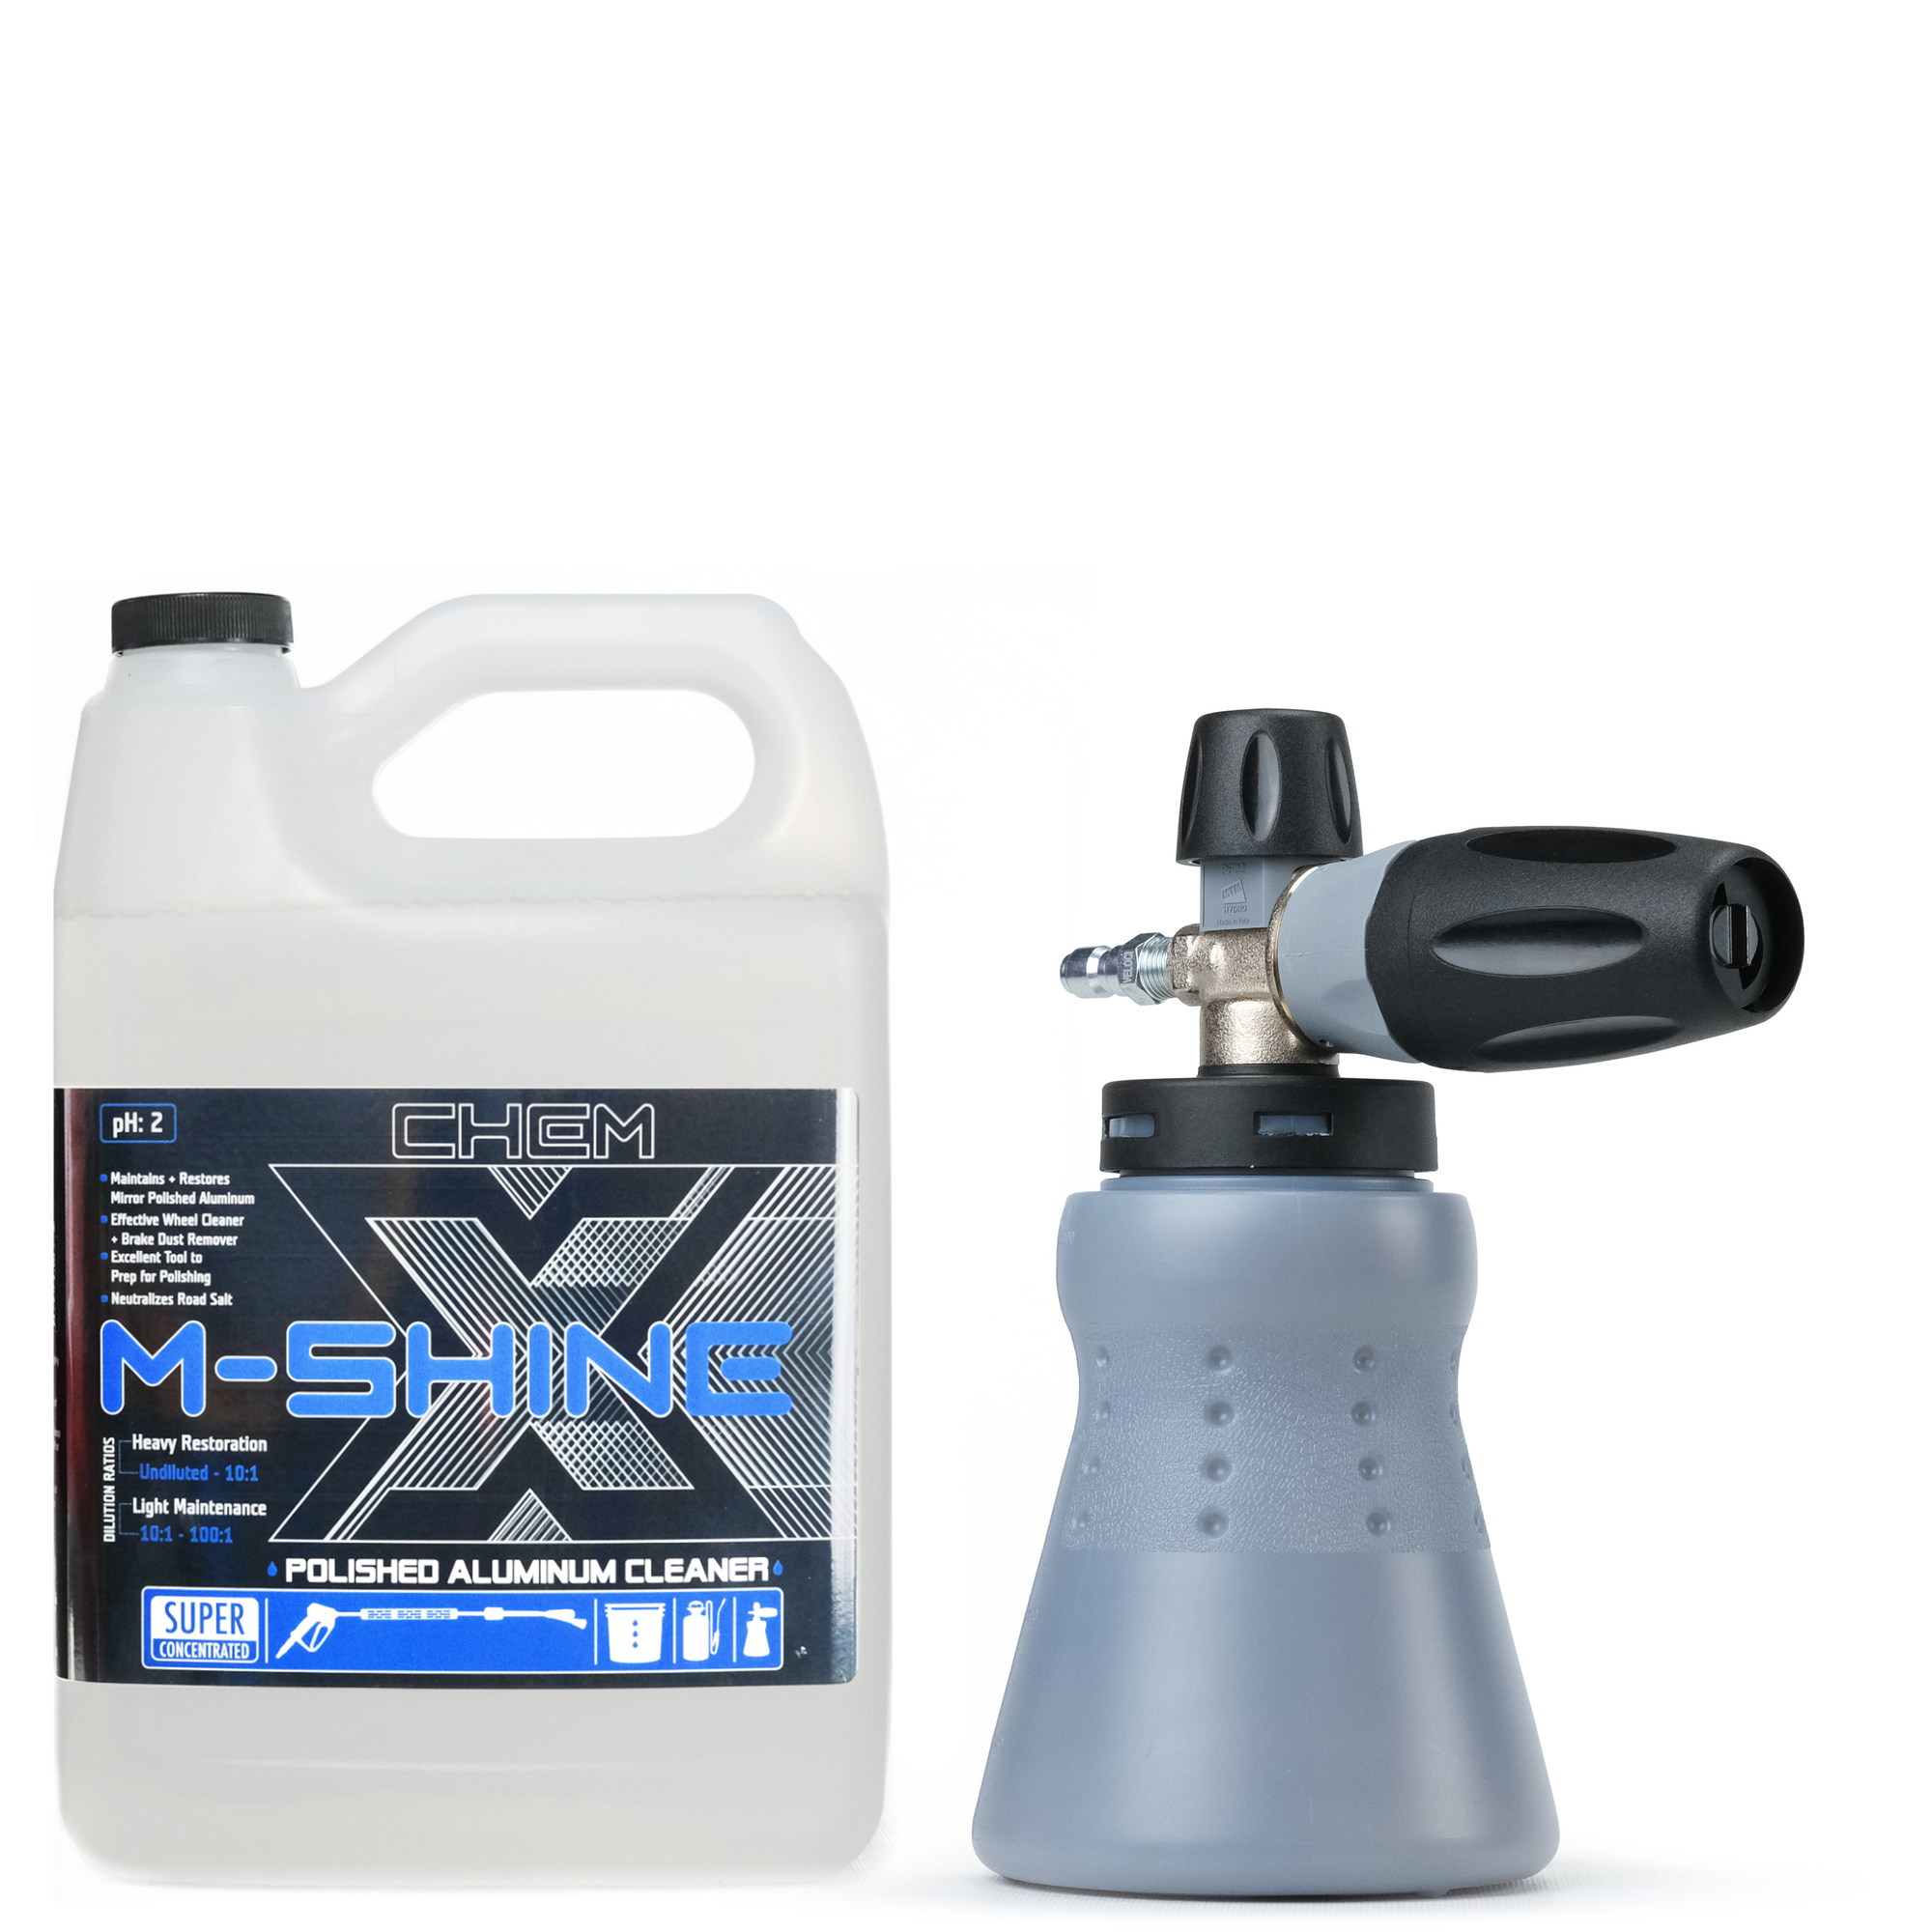 The Xtreme Foam Kit - Chem-X